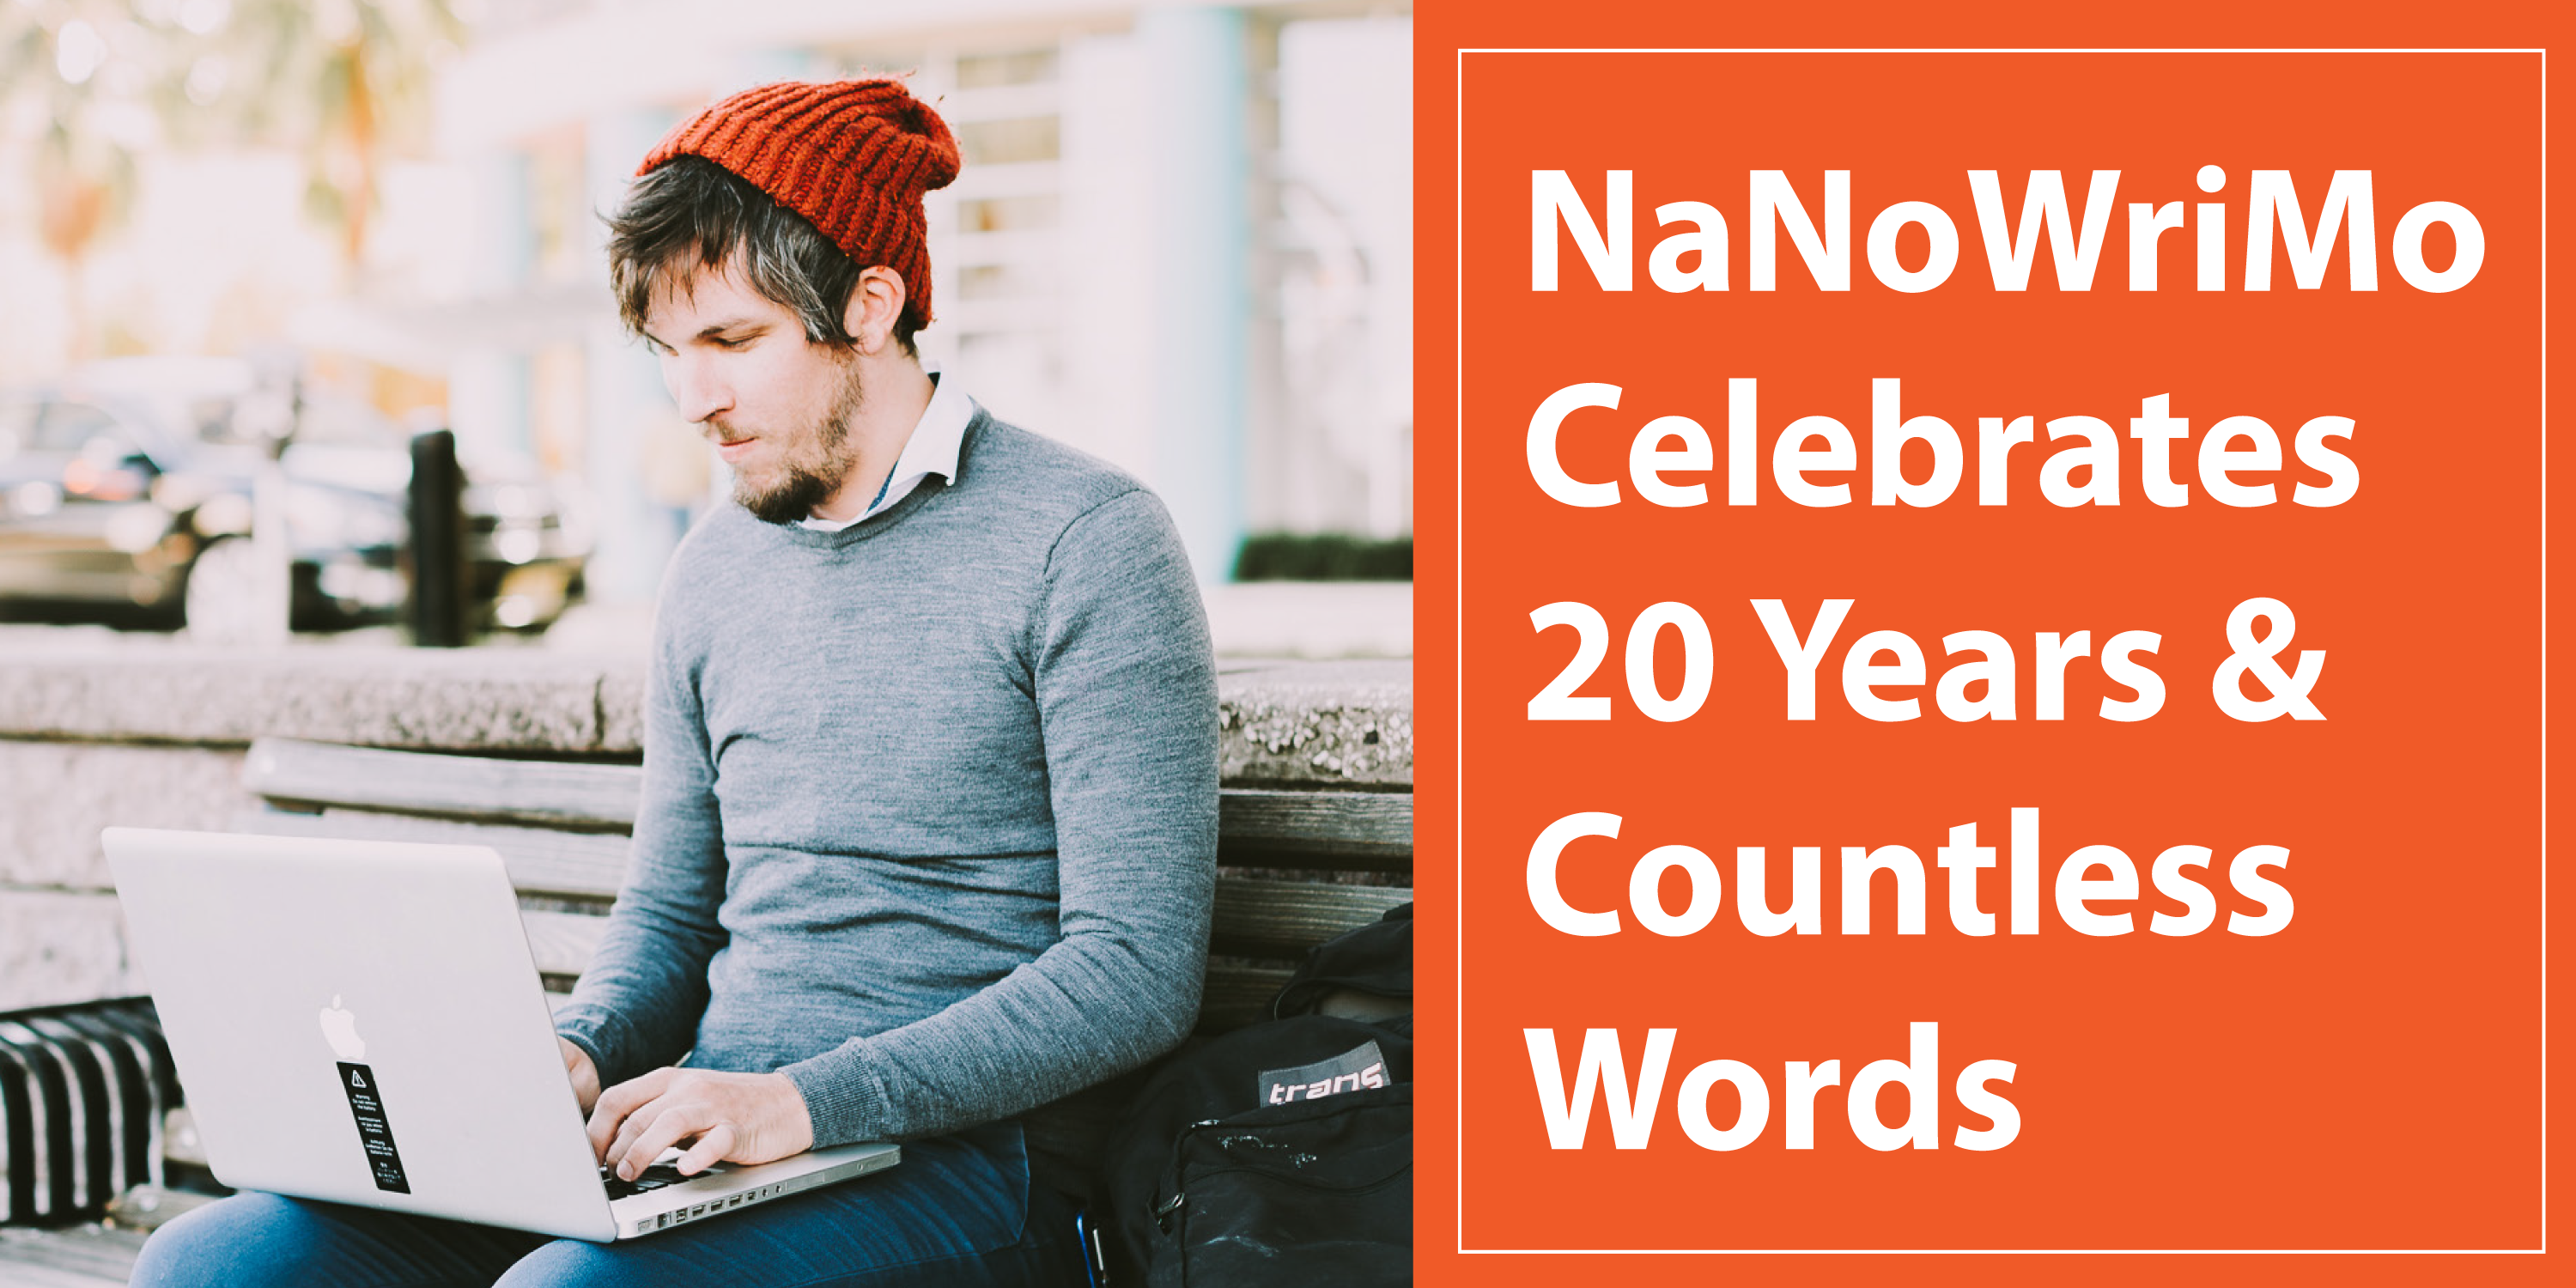 NaNoWriMo Celebrates 20 Years & Countless Words